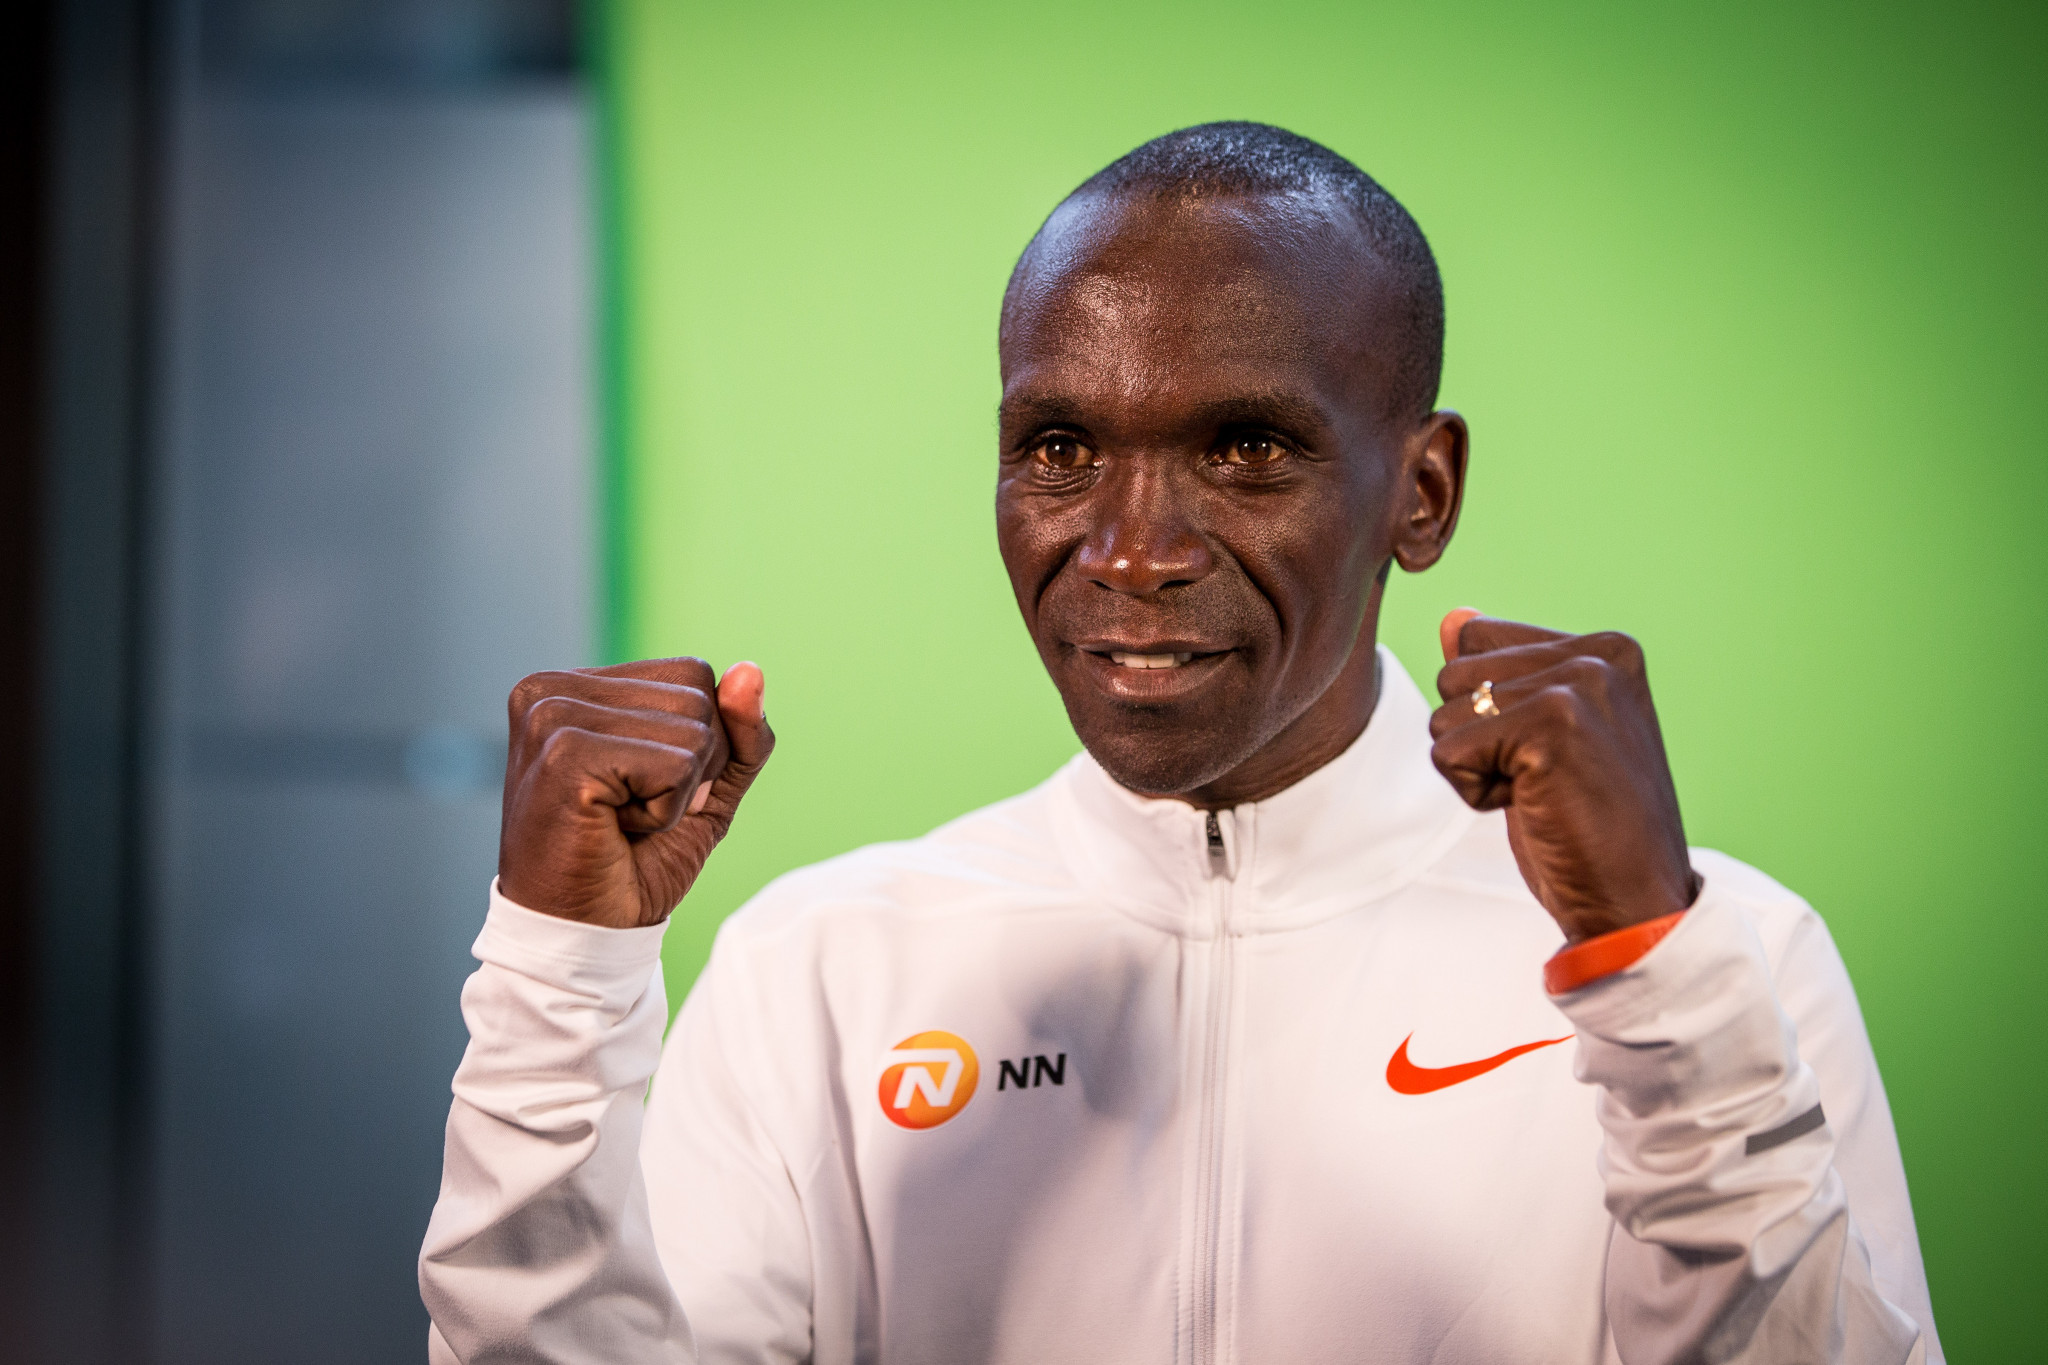 Kenya's Eliud Kipchoge could break the men's marathon world record in Berlin ©Getty Images